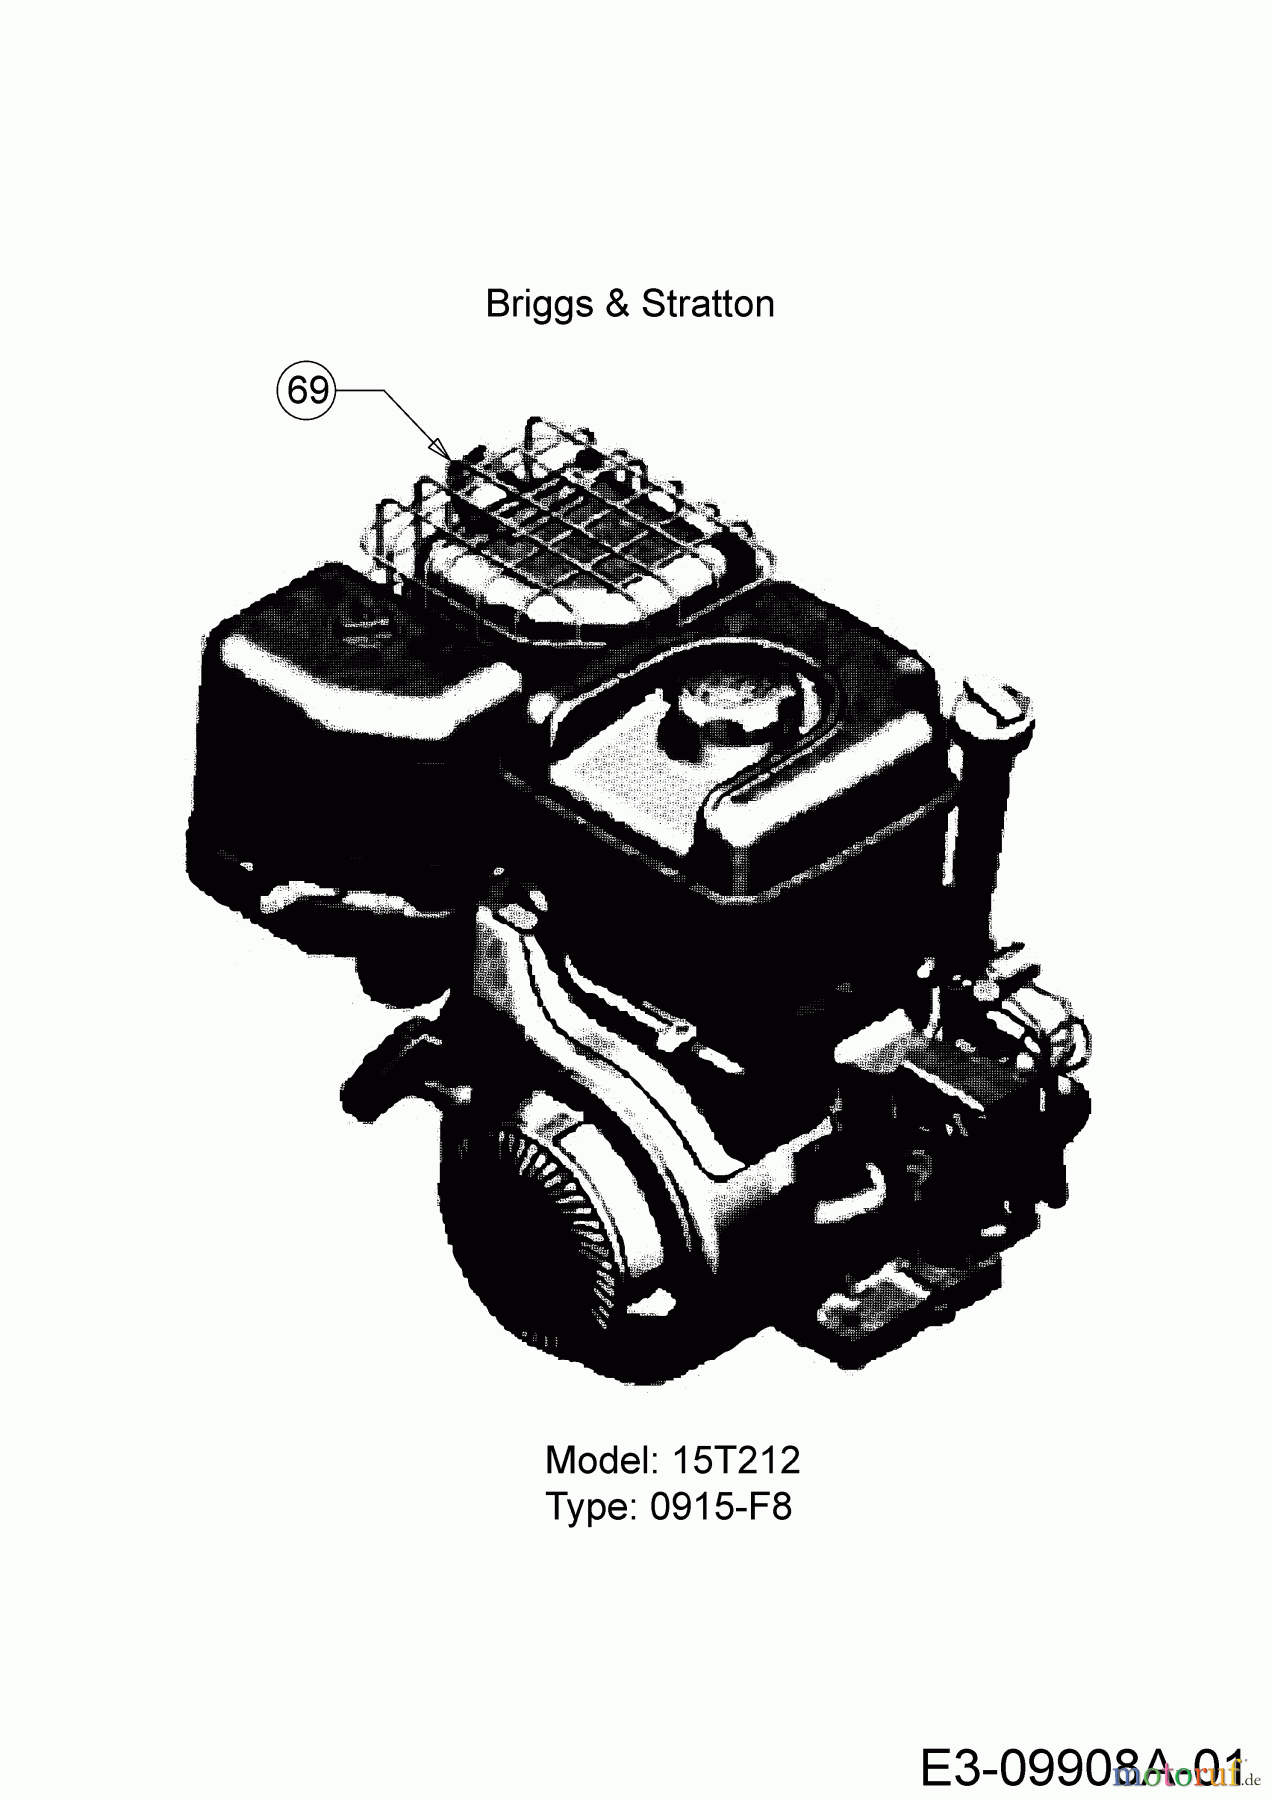  Troy-Bilt Chipper CS 4325 24B-424M766  (2014) Engine Briggs & Stratton